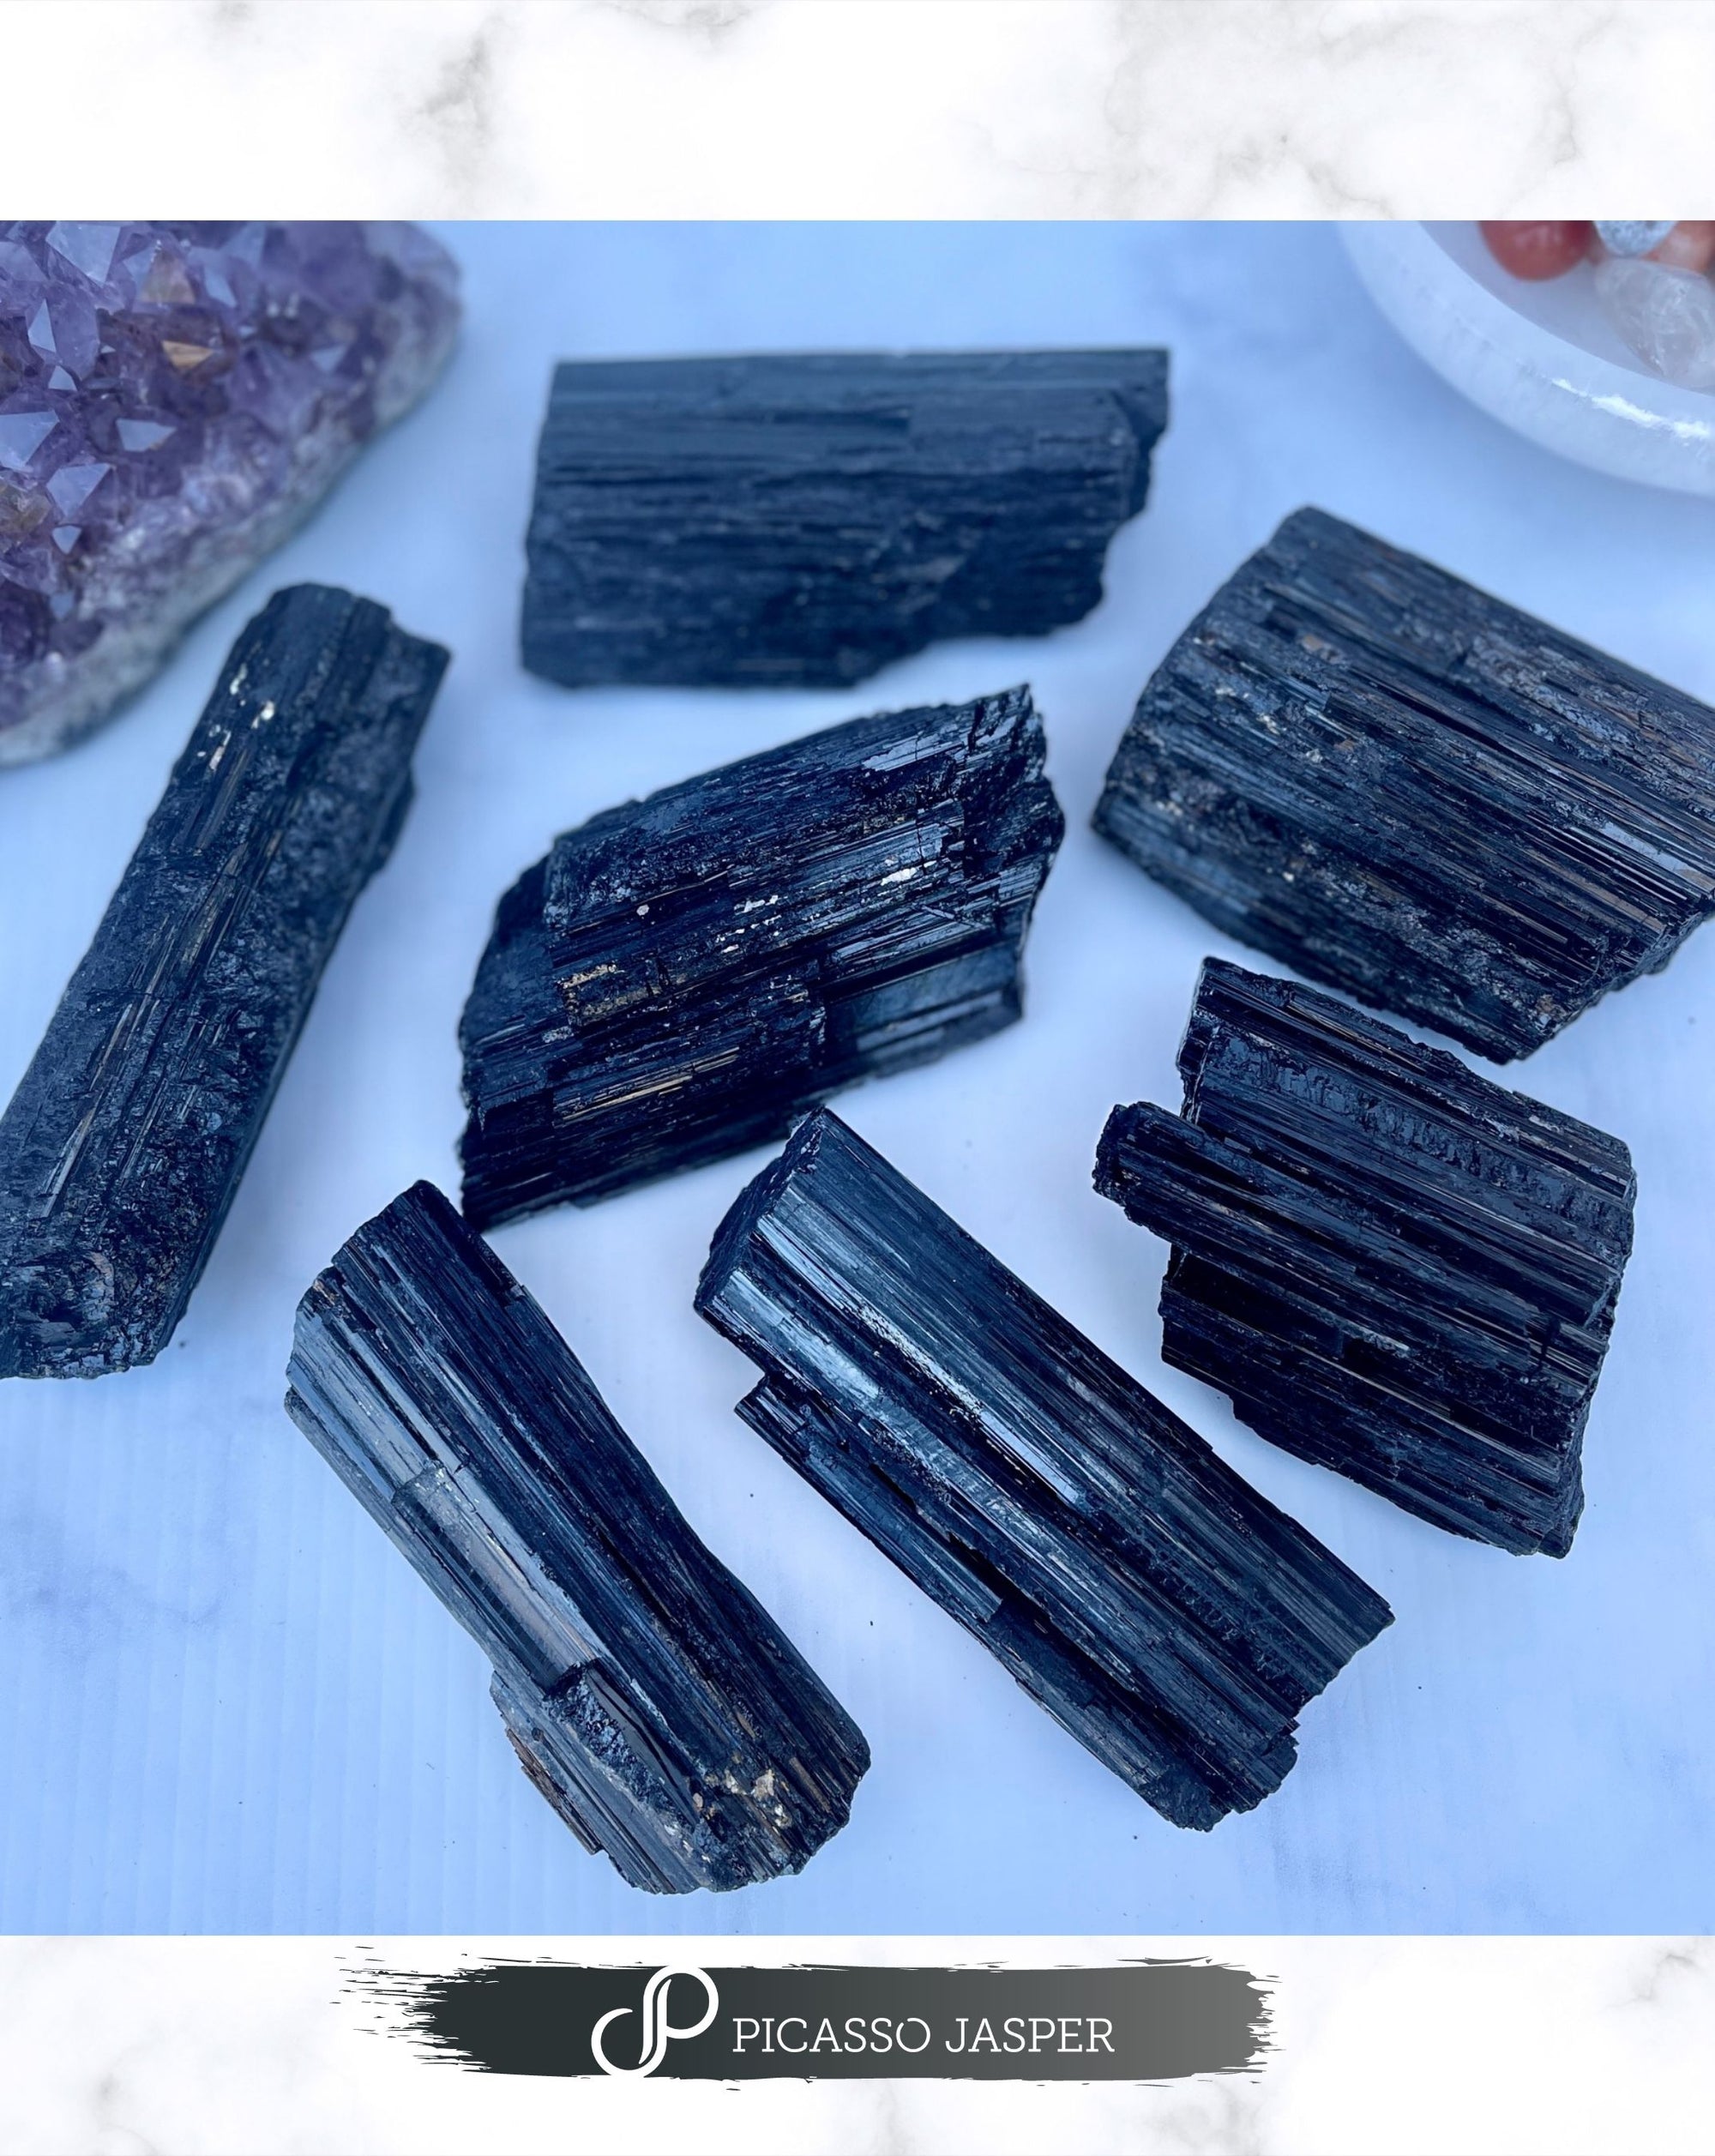 Black Tourmaline Crystal - Grounding, Strength, Protection